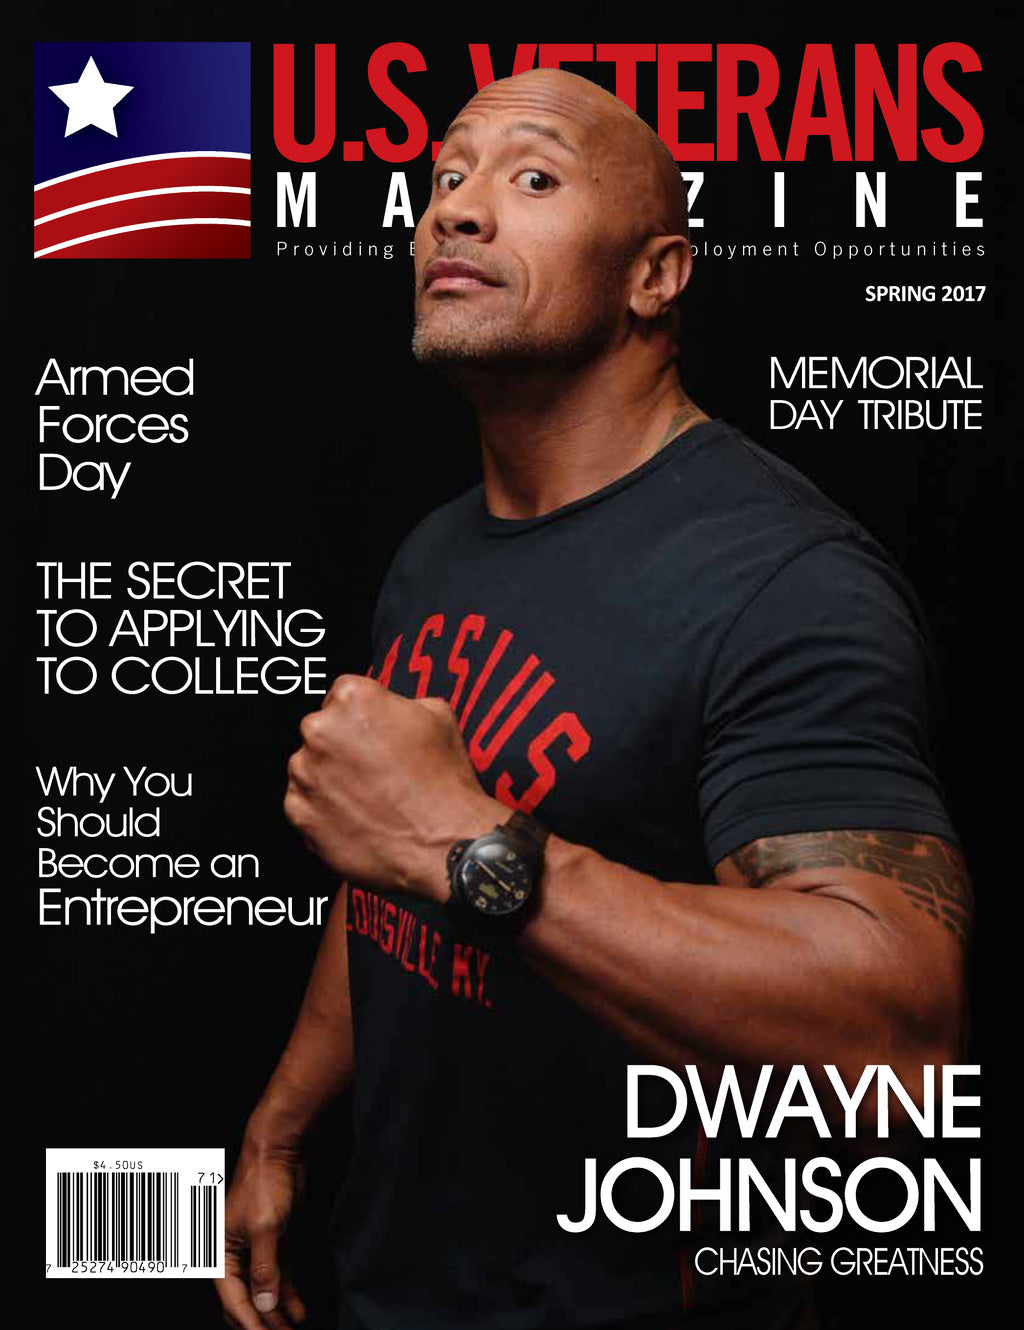 U.S. Veterans MagazinesSpring  2017 The Rock